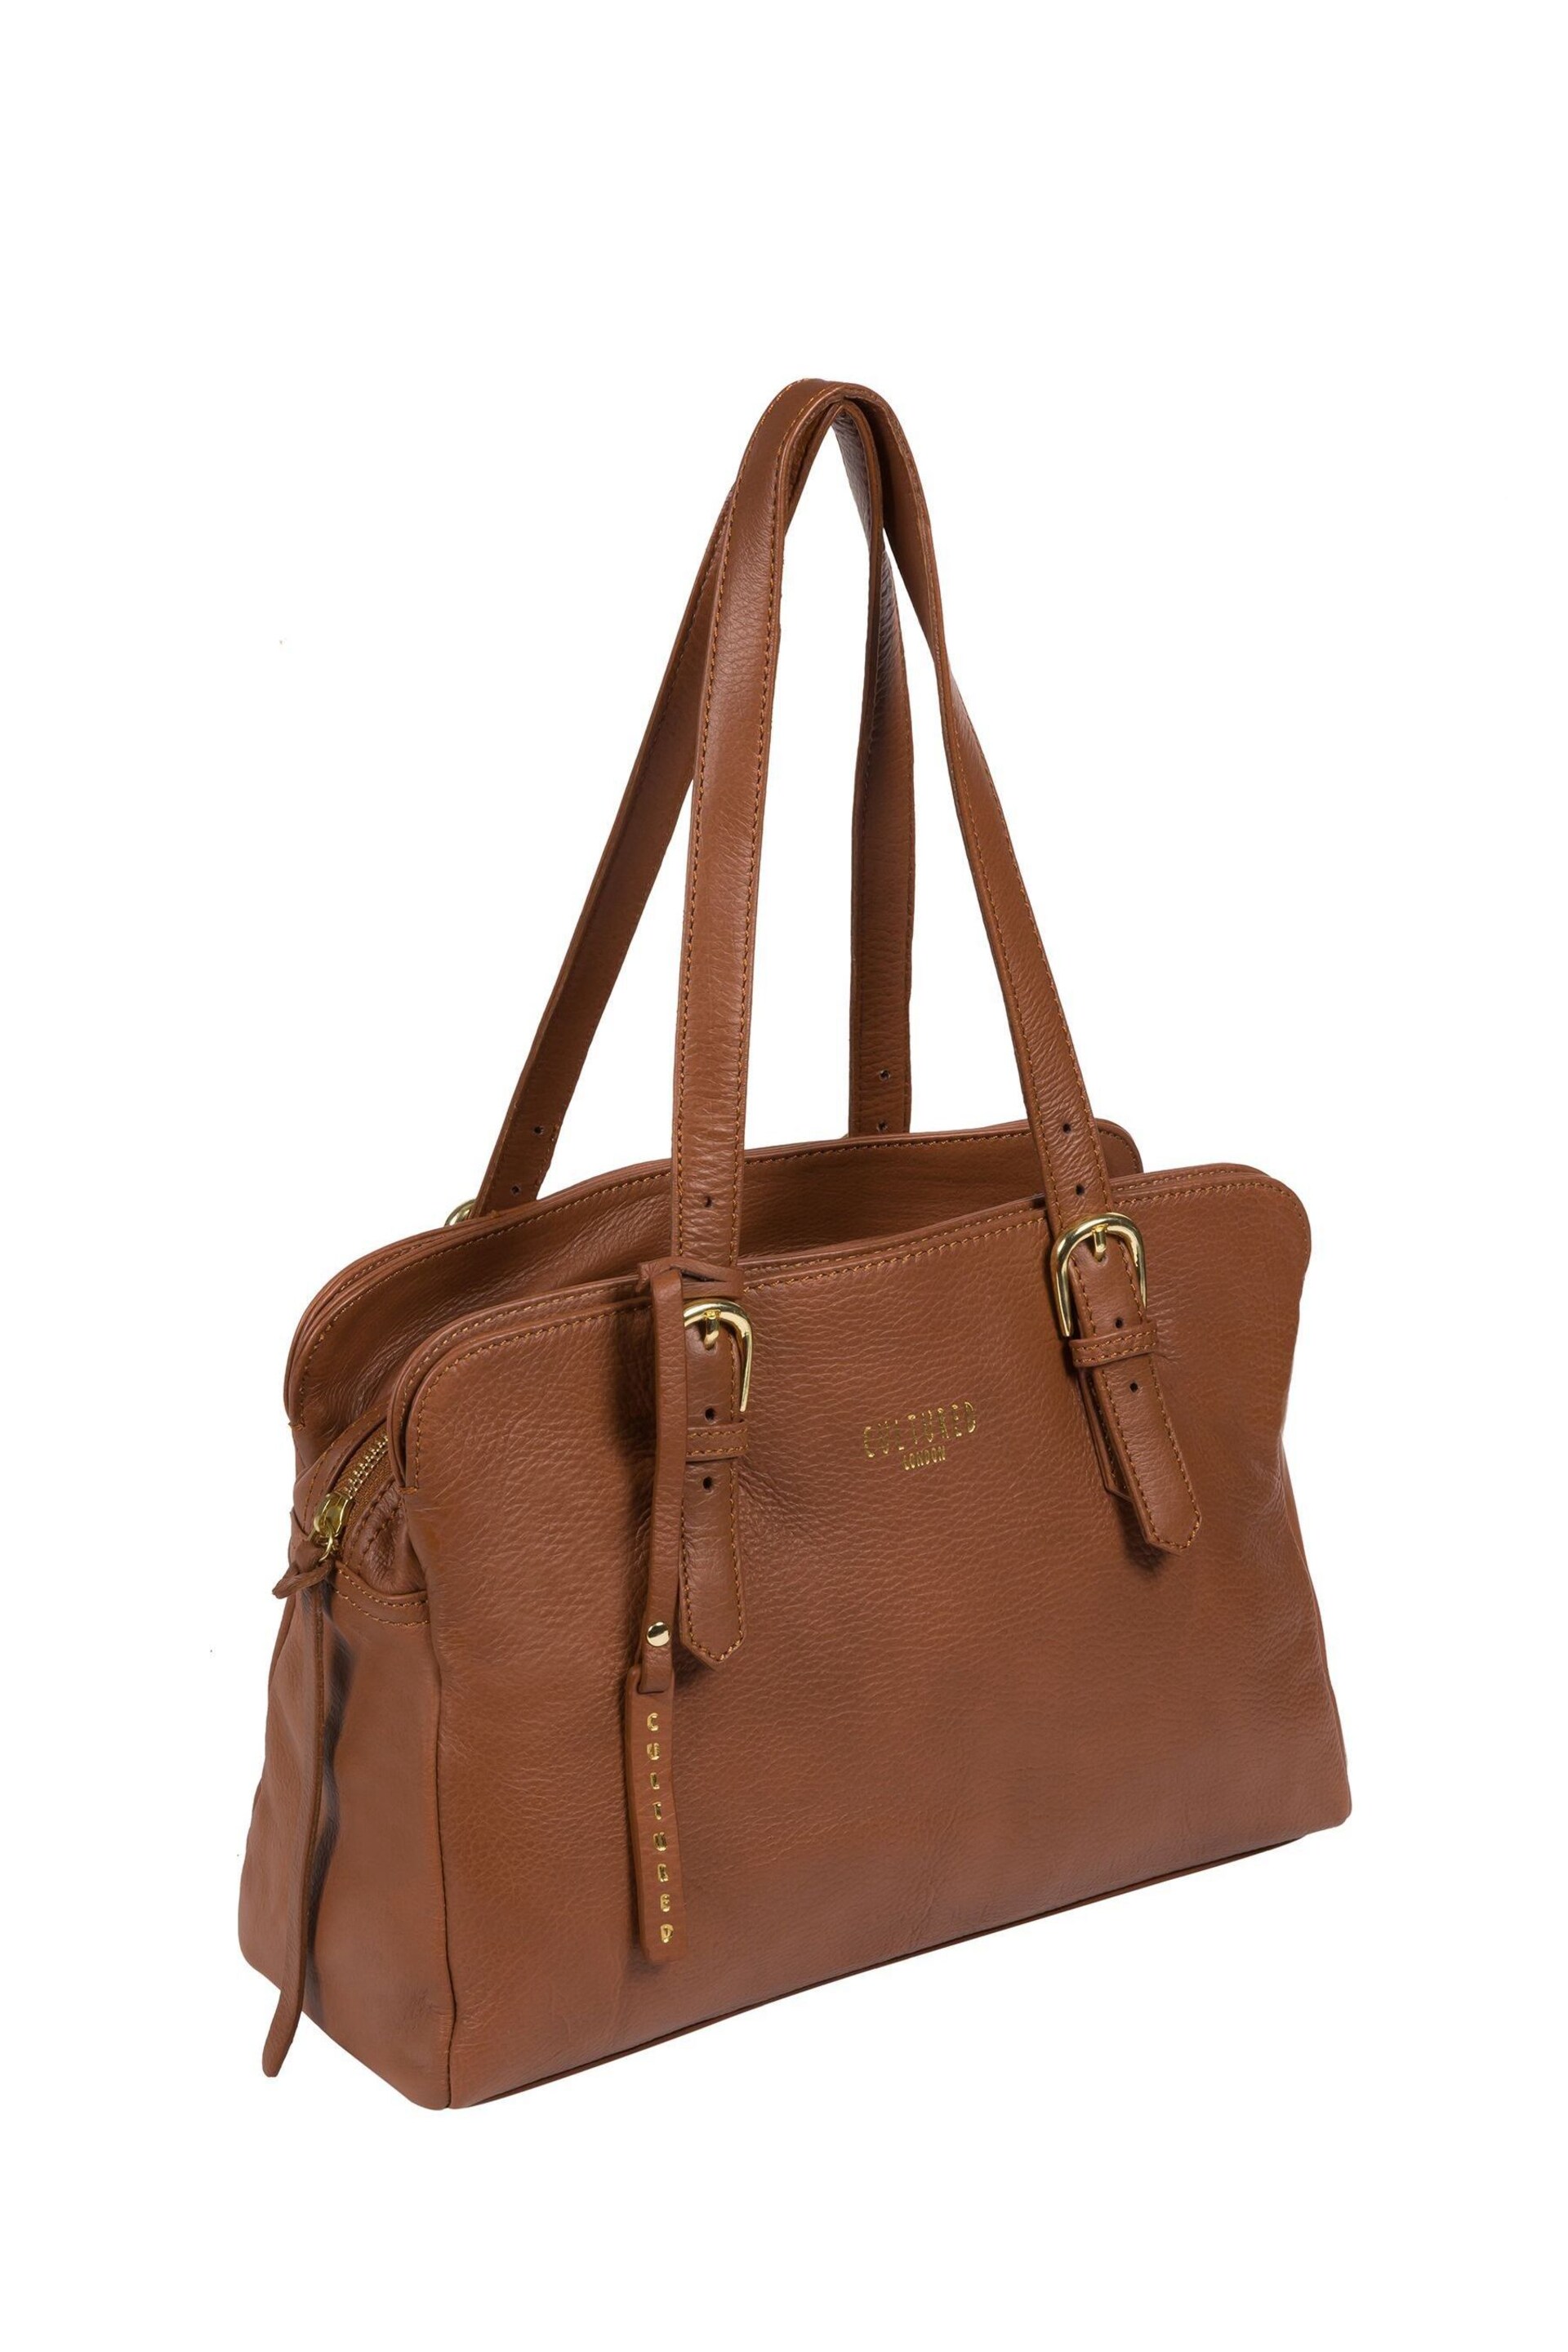 Cultured London Beckenham Leather Handbag - Image 2 of 6